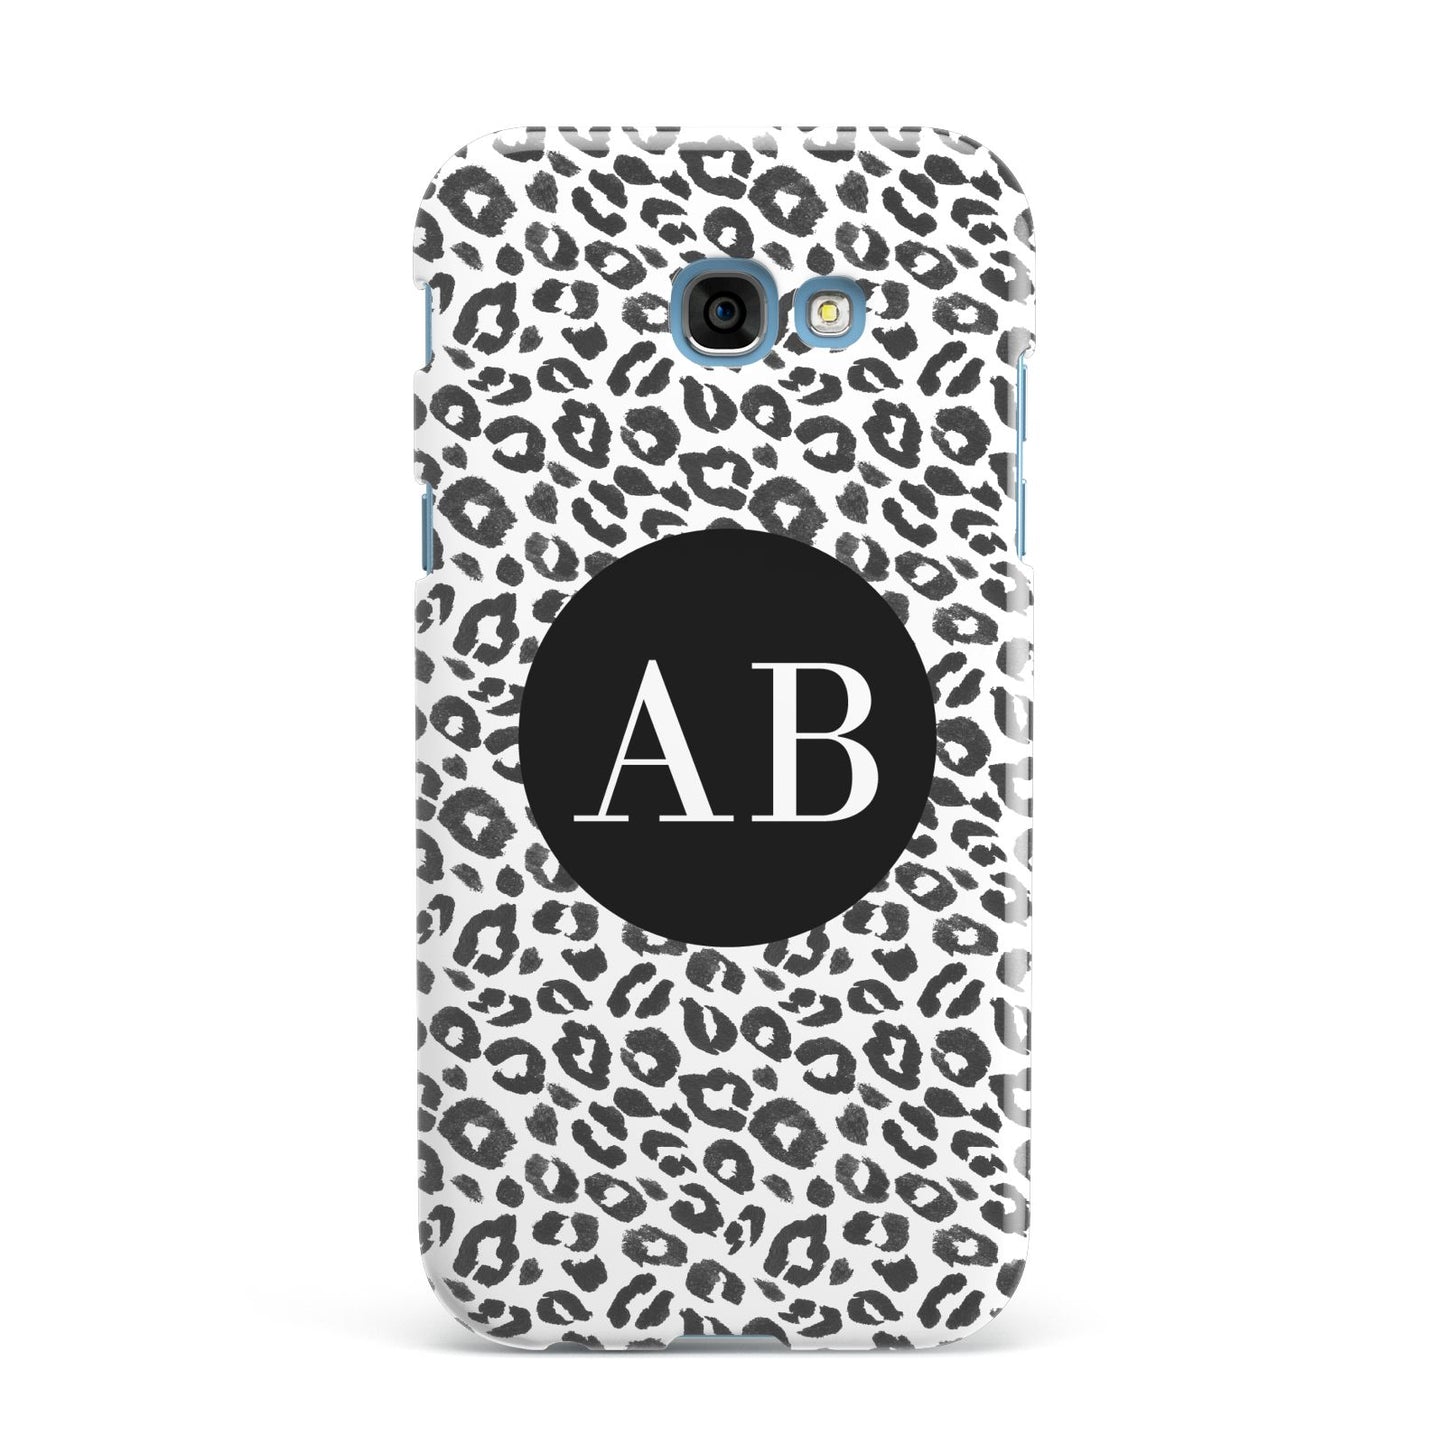 Leopard Print Black and White Samsung Galaxy A7 2017 Case